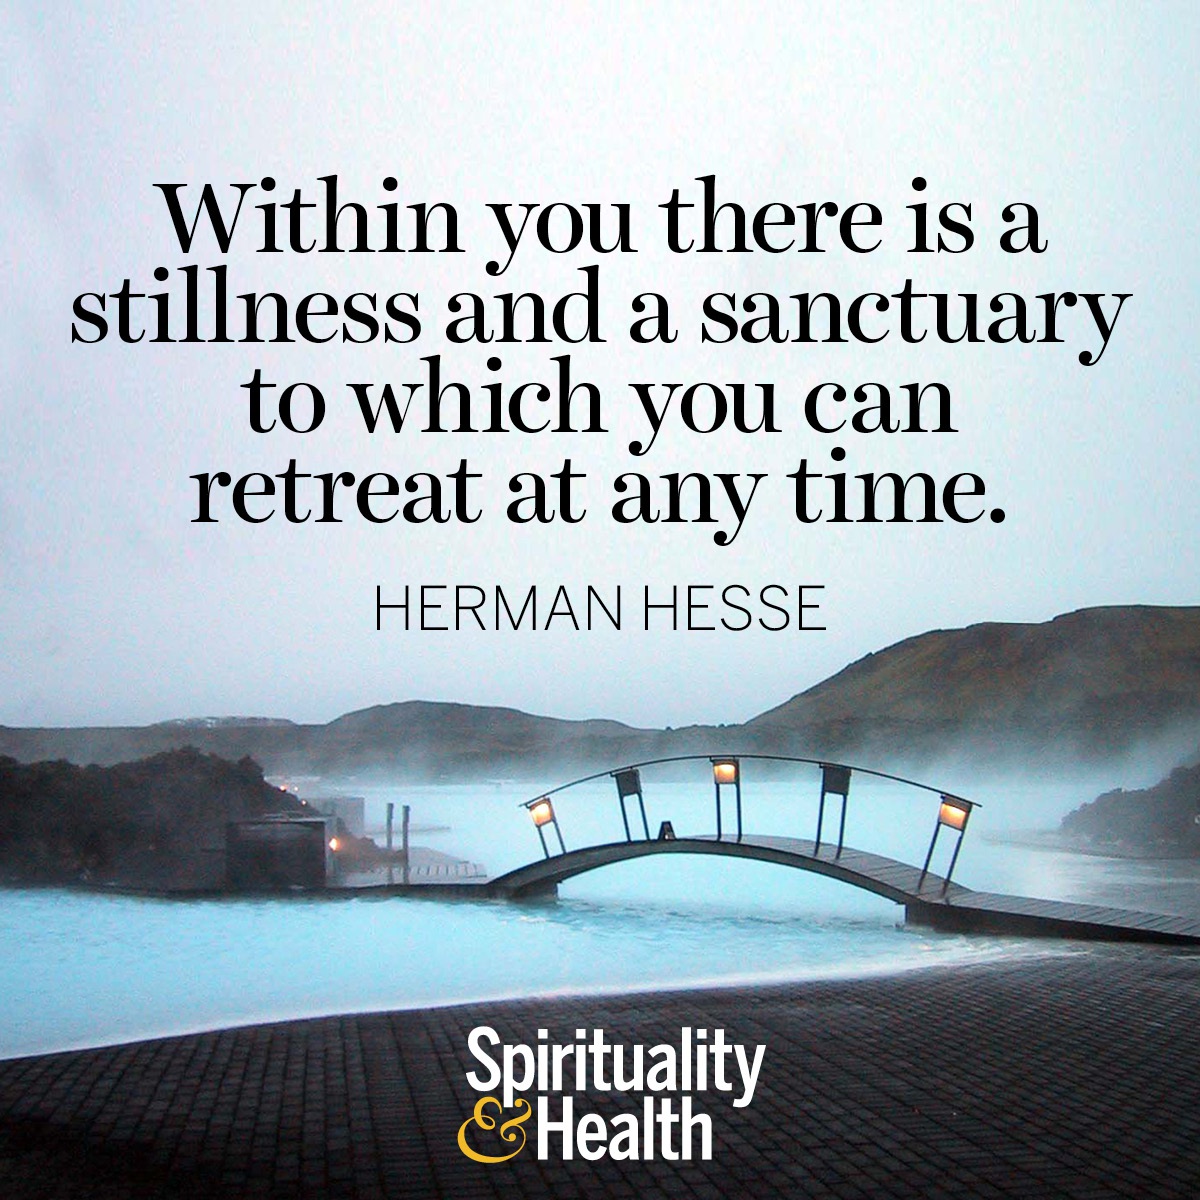 Herman Hesse on inner strength. | Spirituality & Health